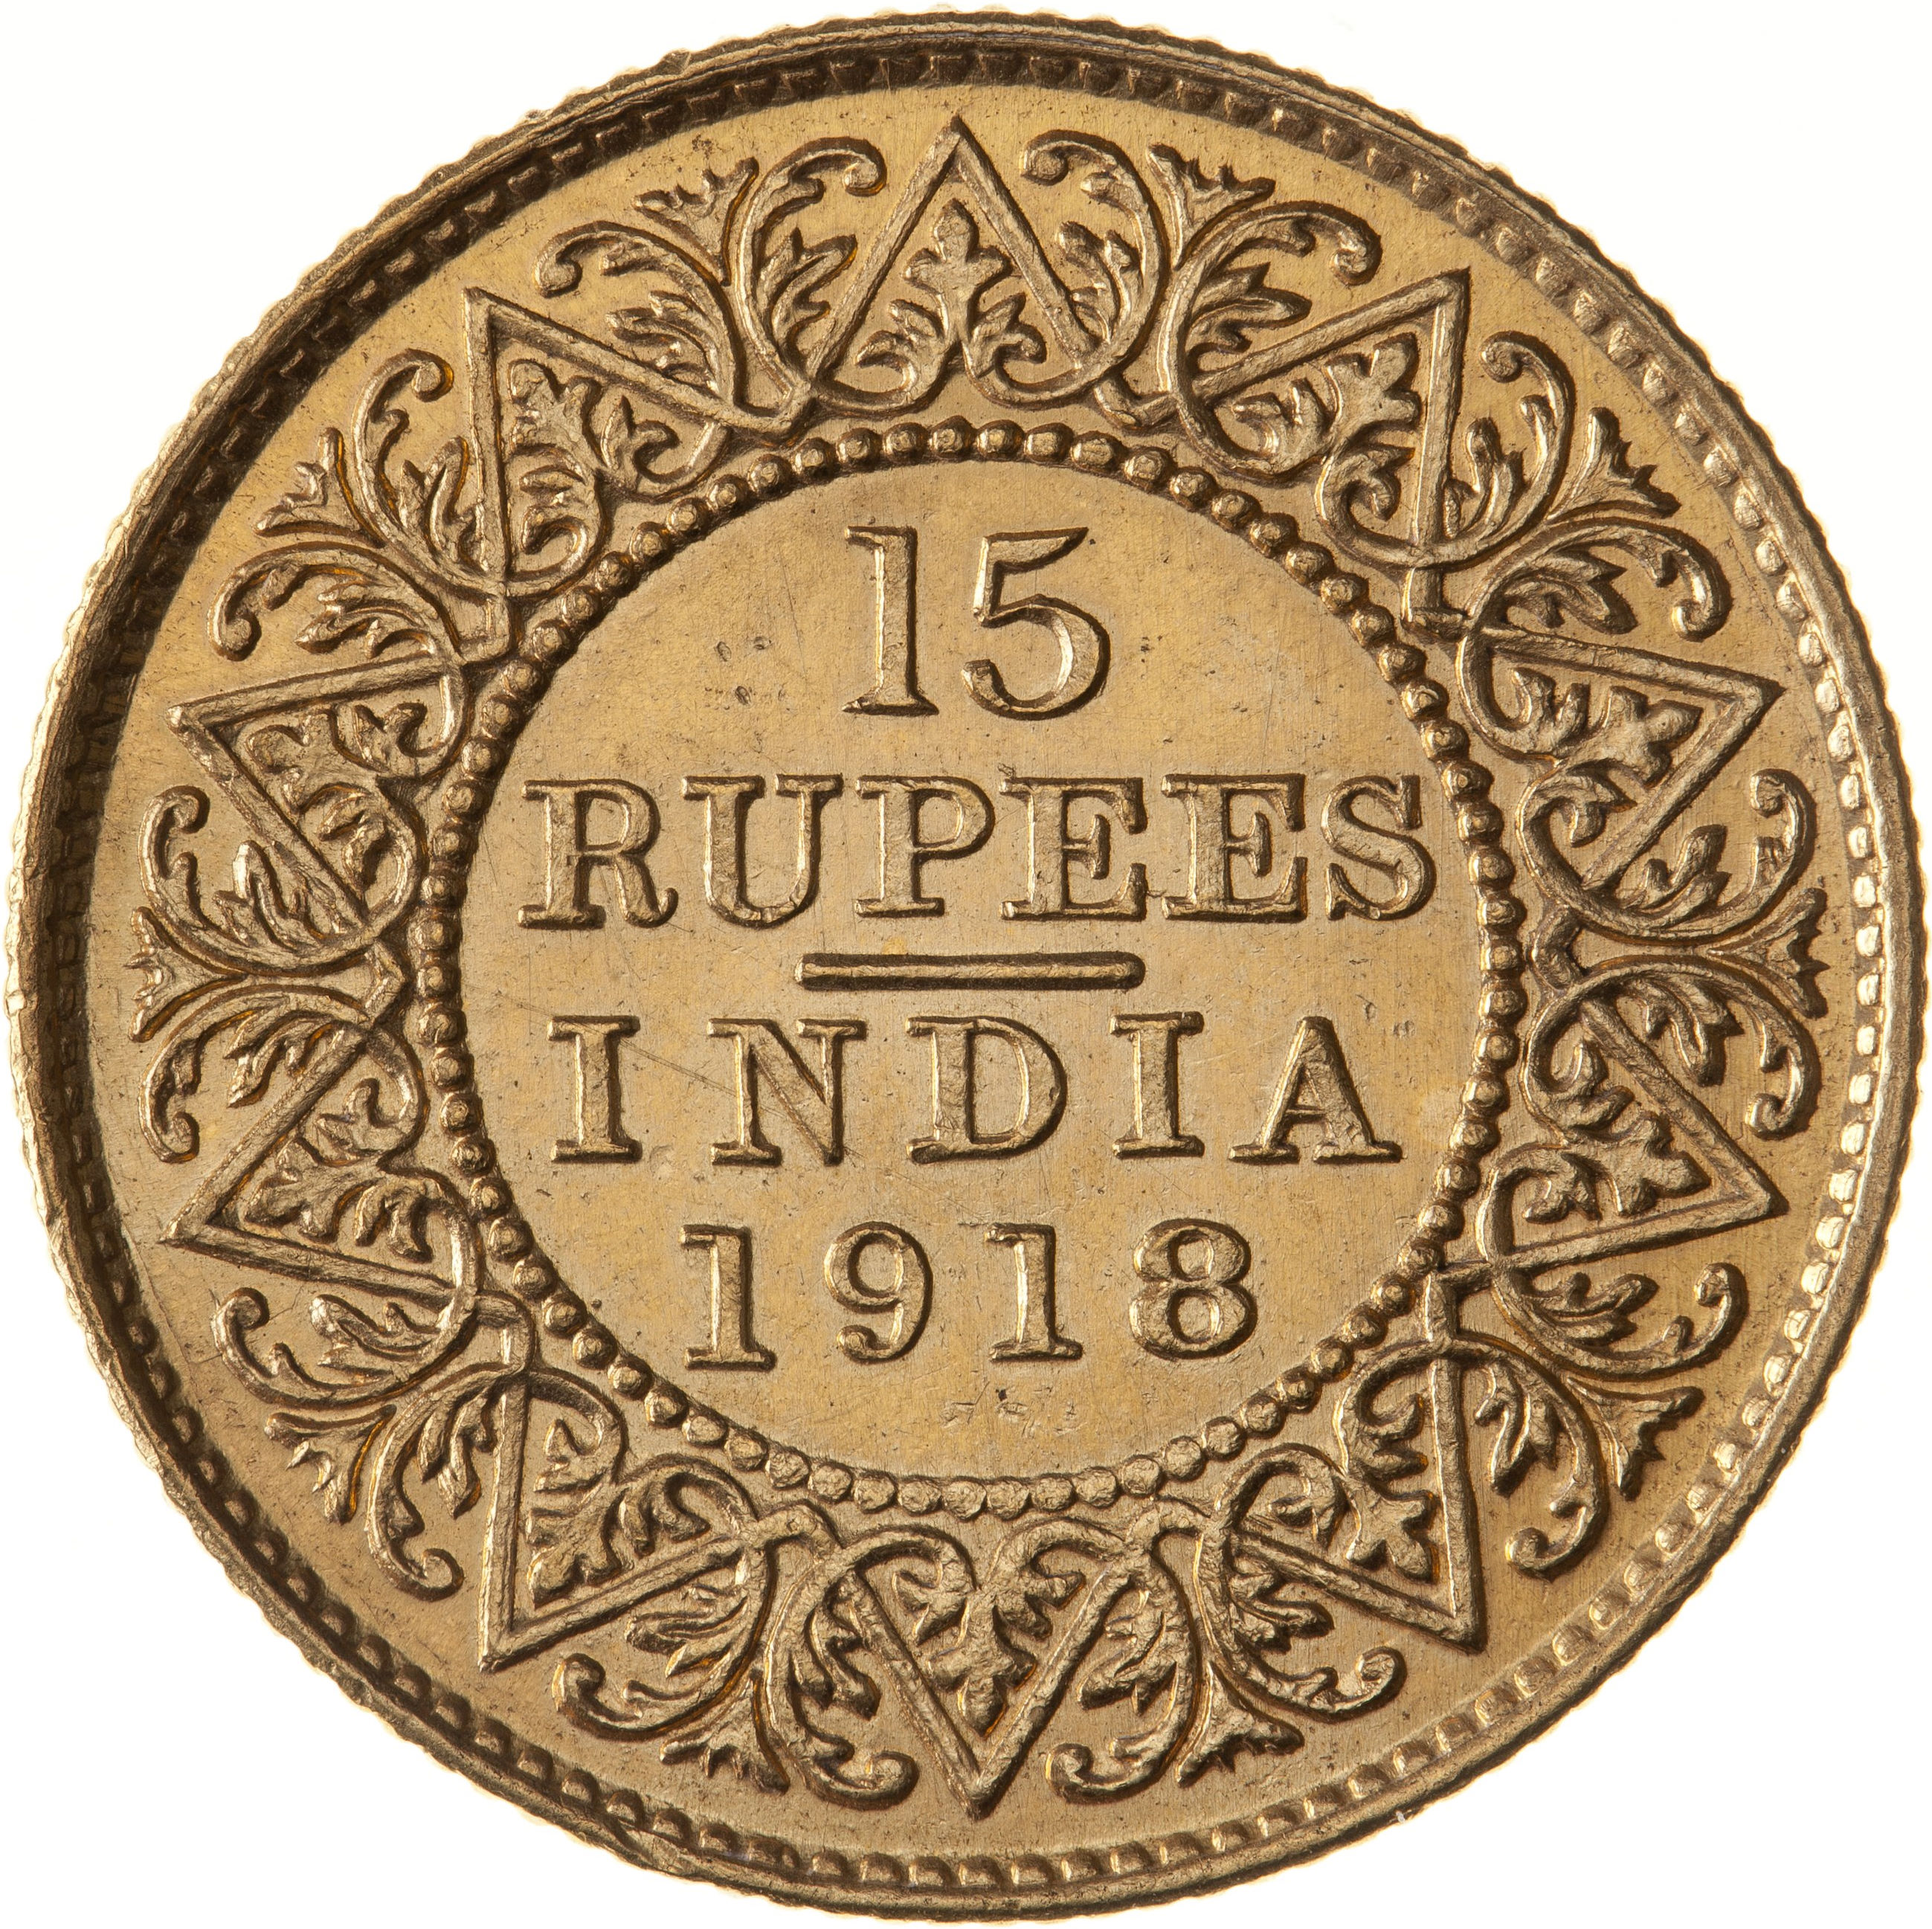 1918 15 rupees reverse